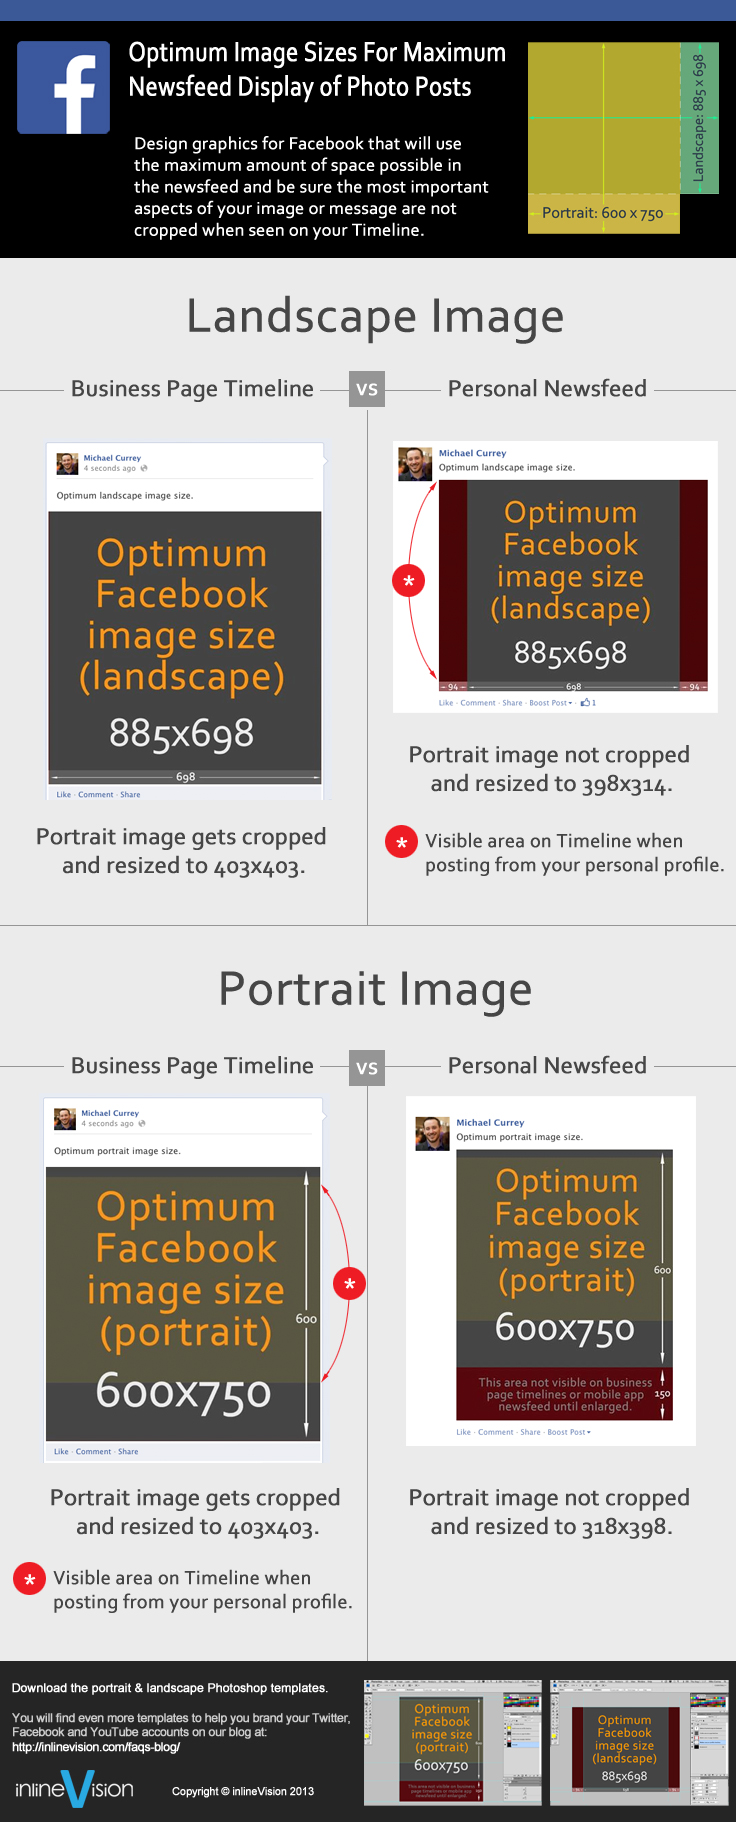 infographic - optimum image sizes for maximum newsfeed display of photo posts 